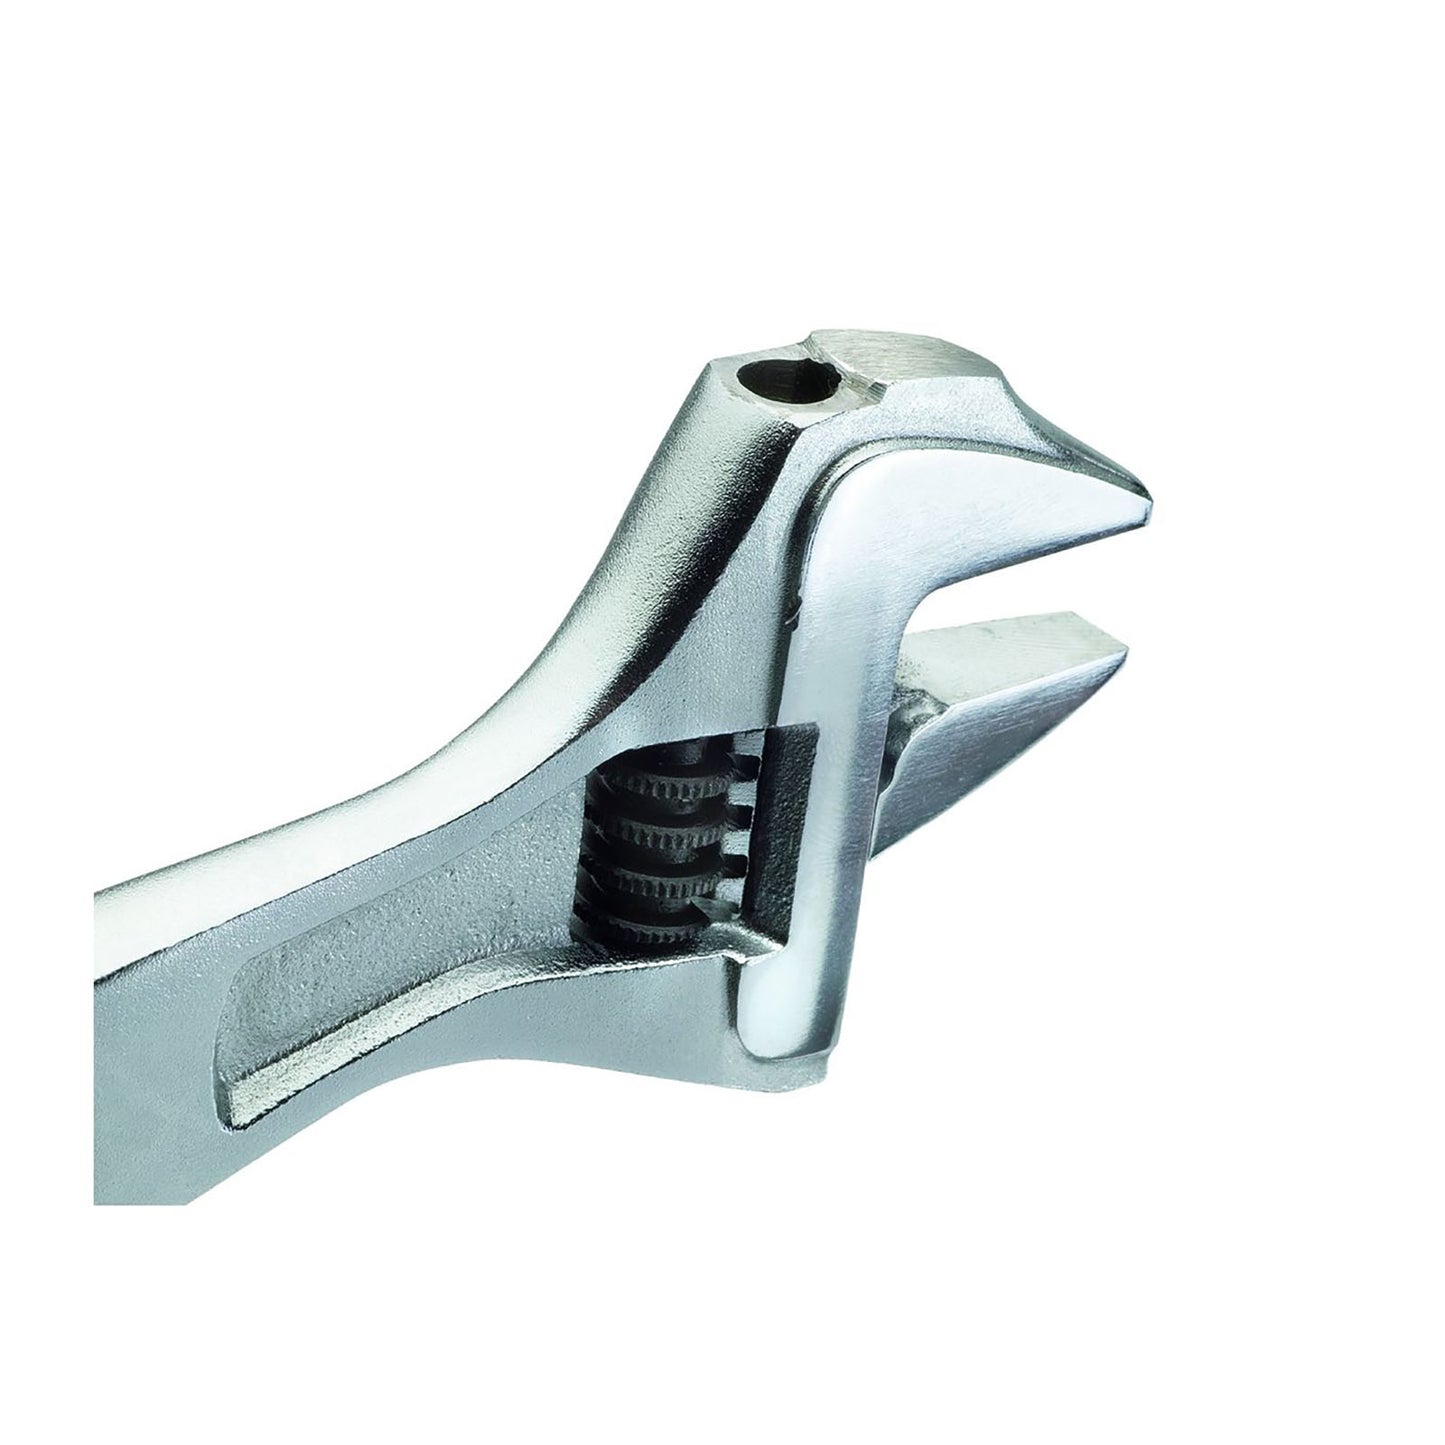 GEDORE SB 60 S 12 C - 12" Adjustable Wrench (3100278)